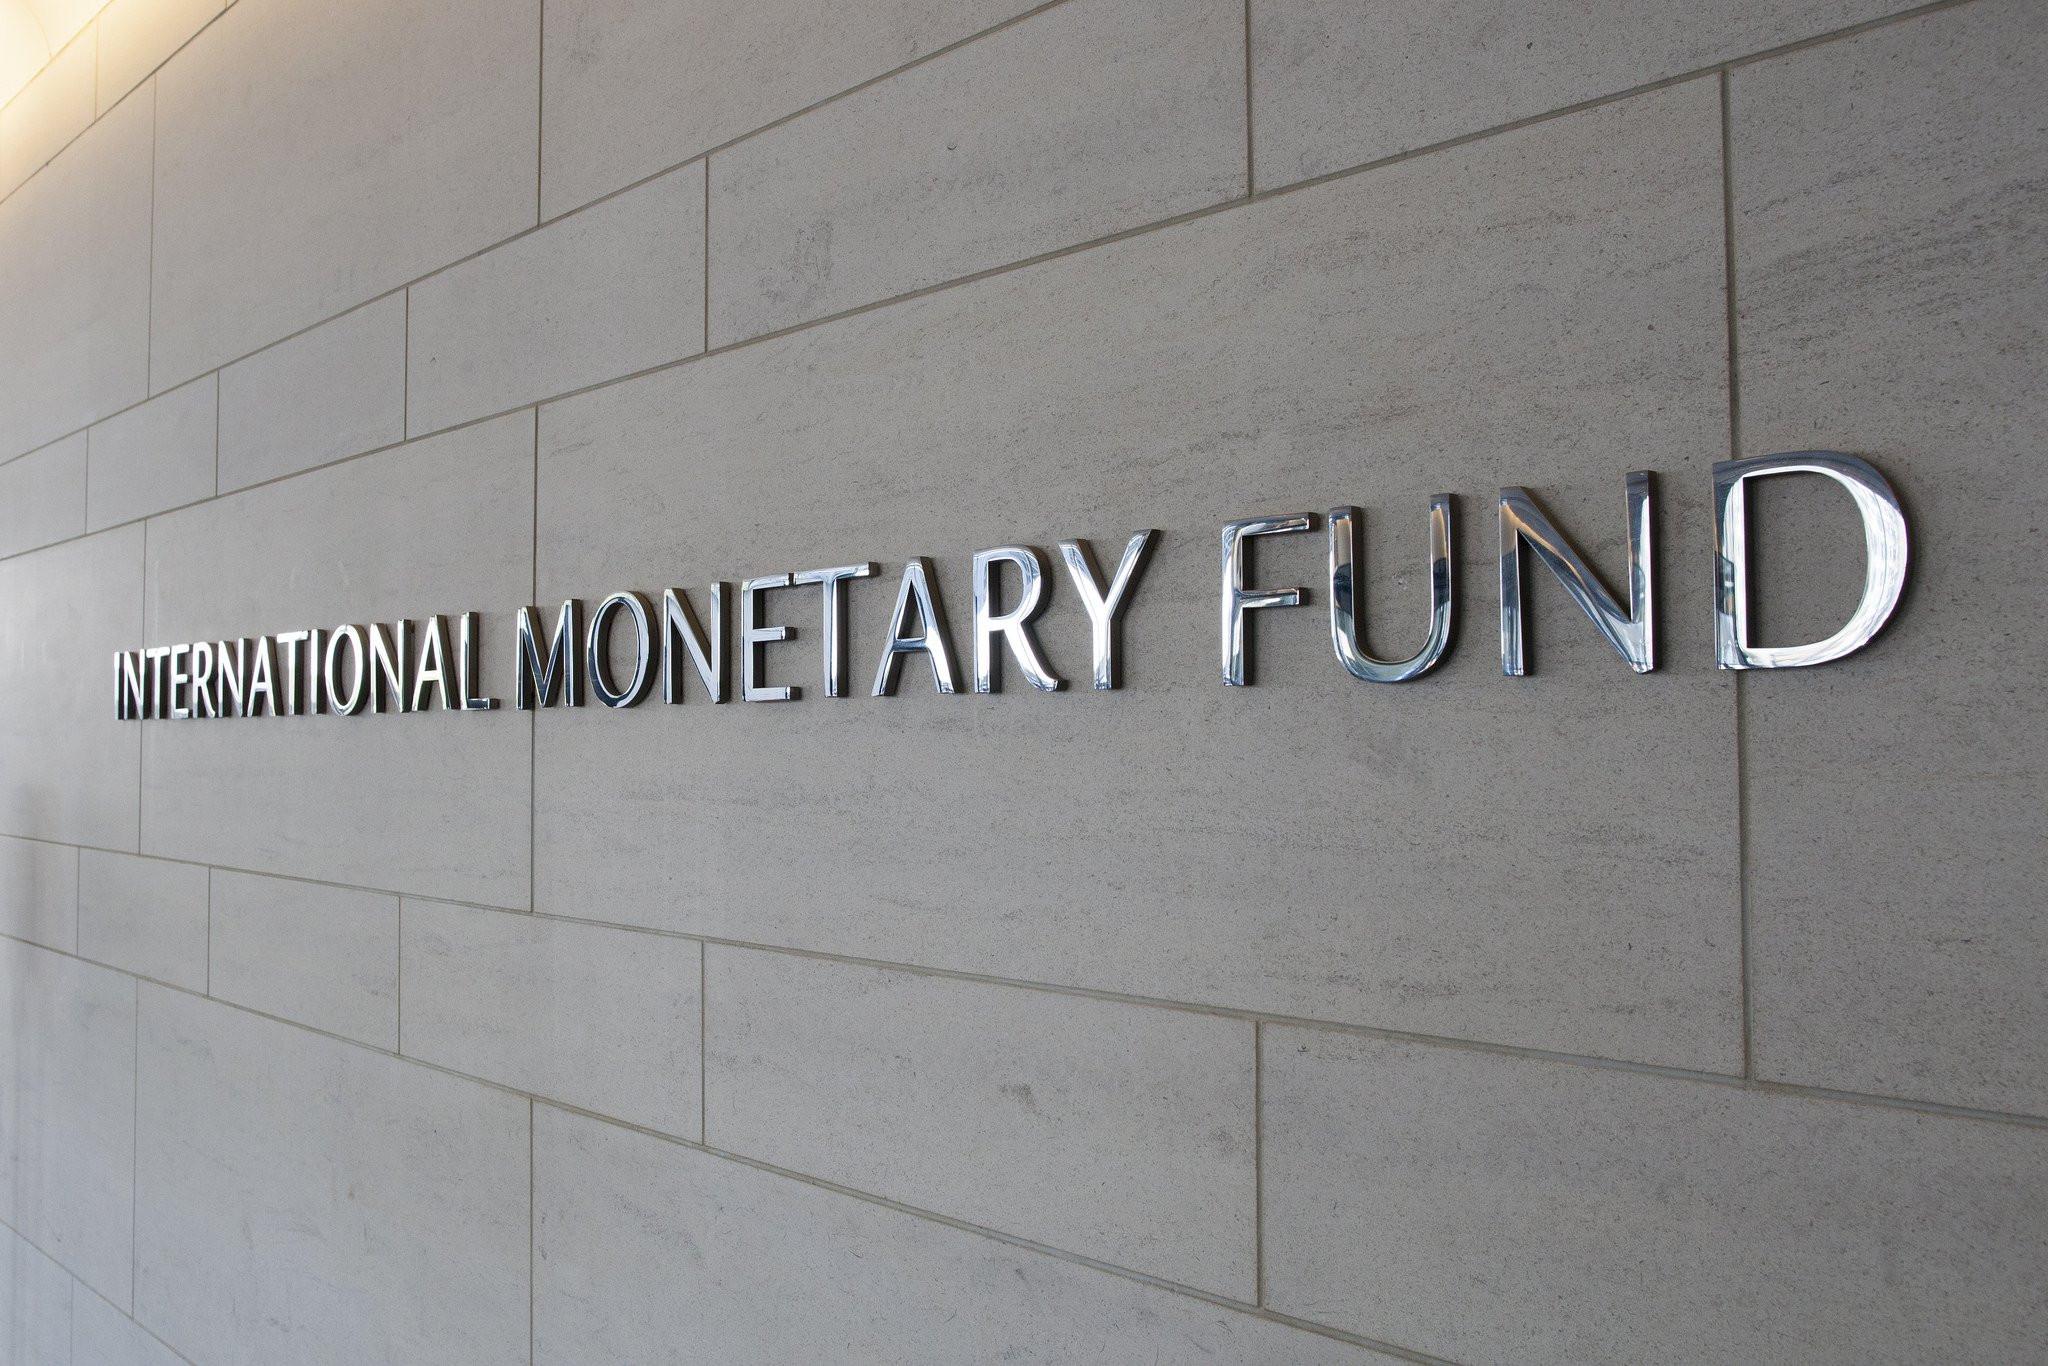 Валютные фонды банков. МВФ штаб квартира. Международный валютный фонд. Международный валютный фонд (МВФ) - International monetary Fund (IMF). МВФ здание.